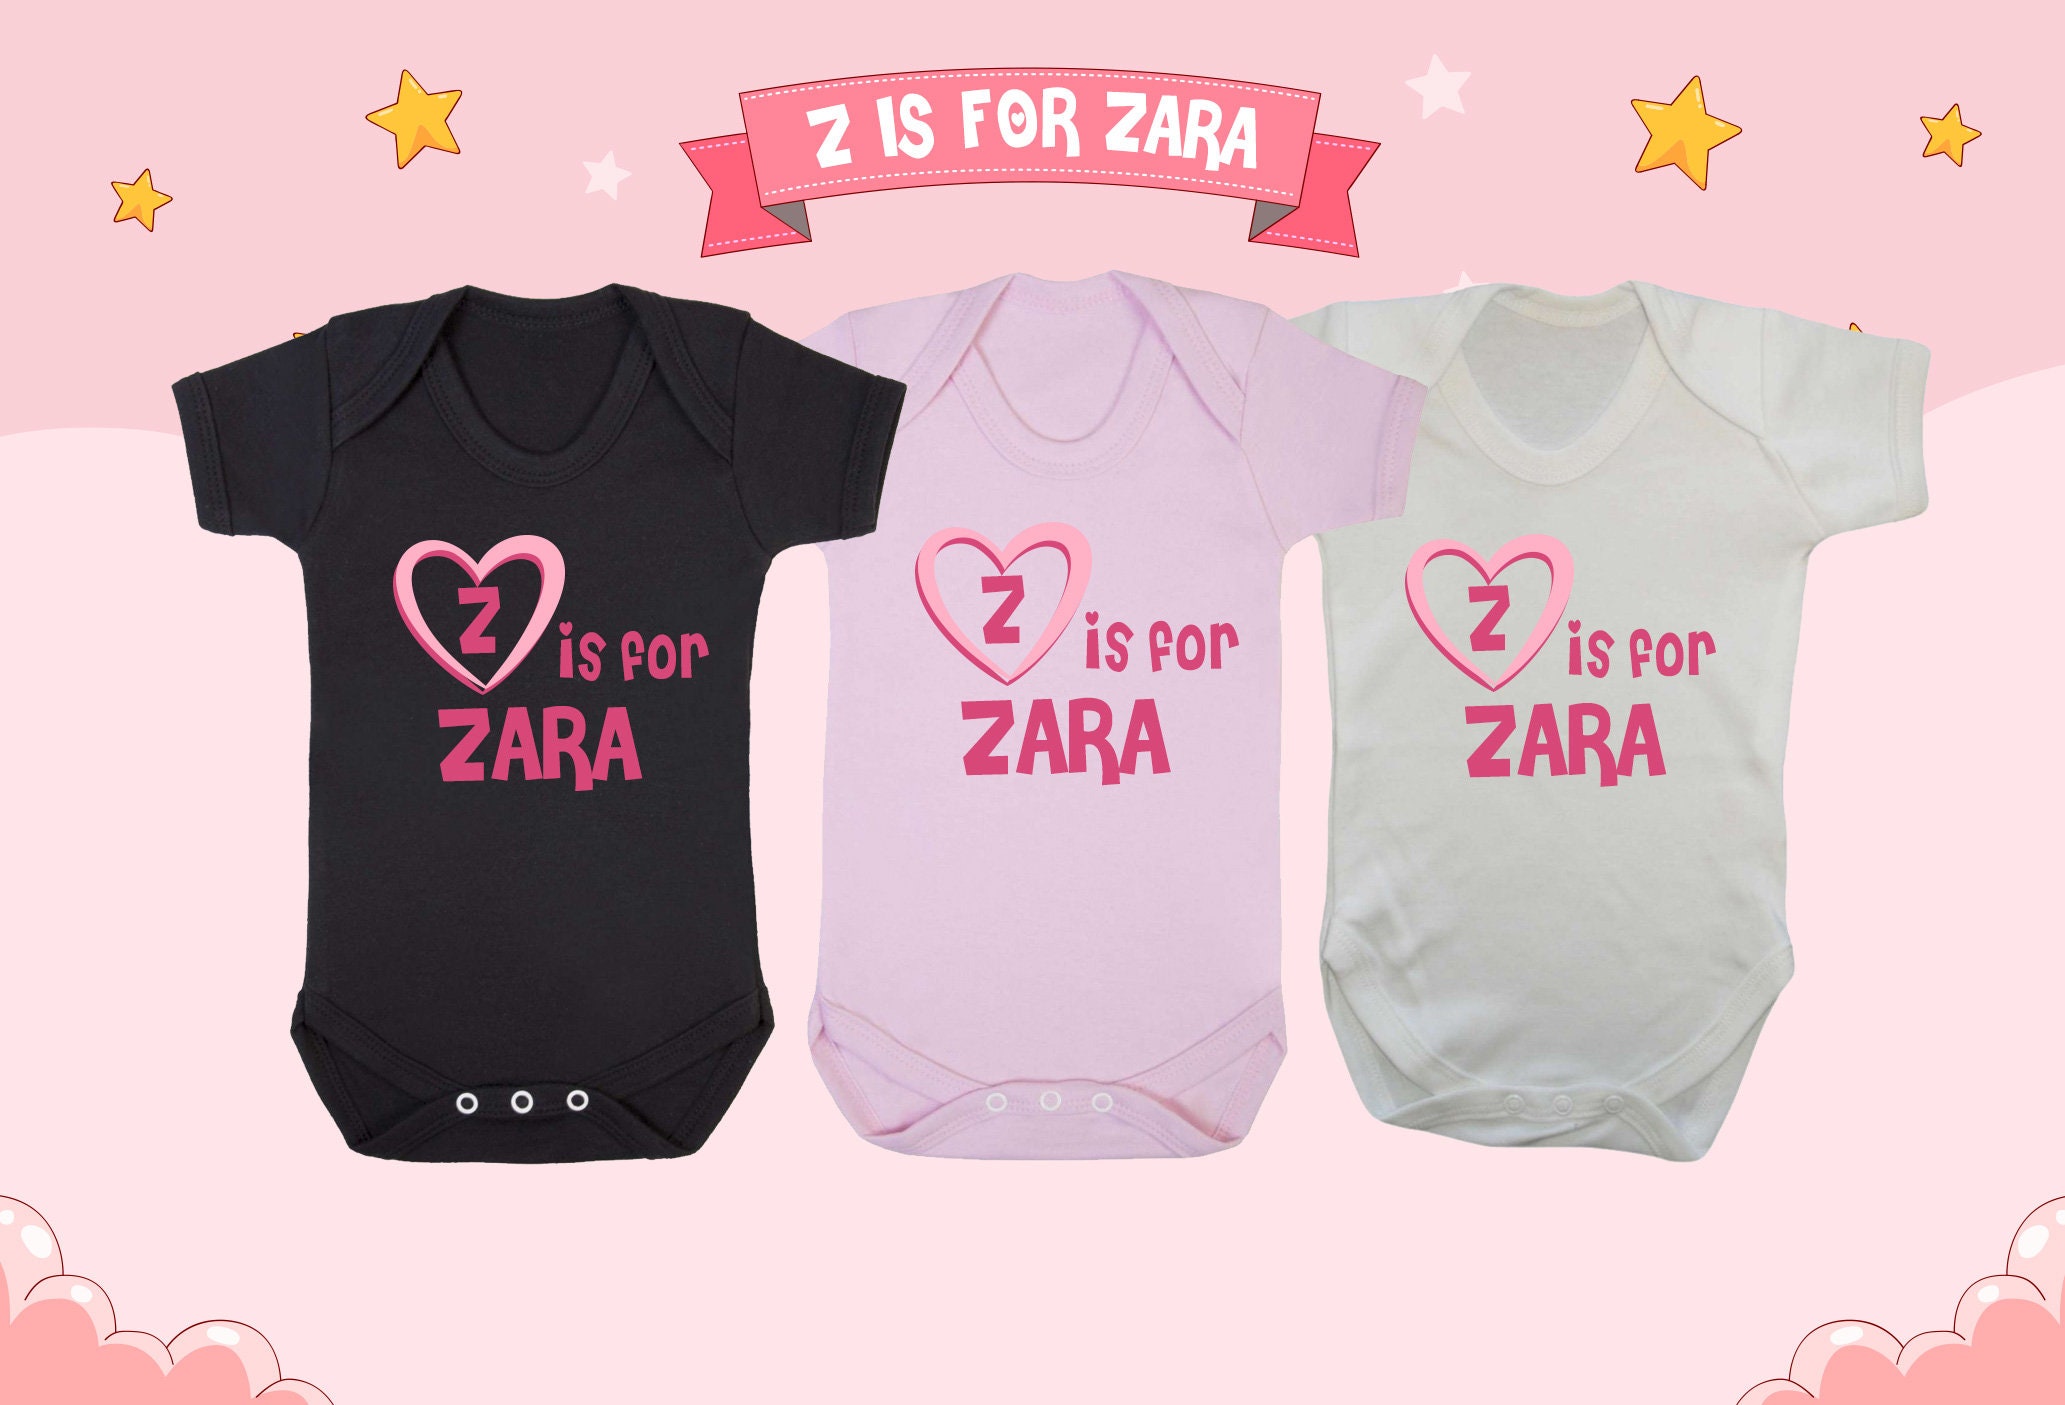 Zara Baby Dream big. Zoe Baby girl онлифонс. Ava baby